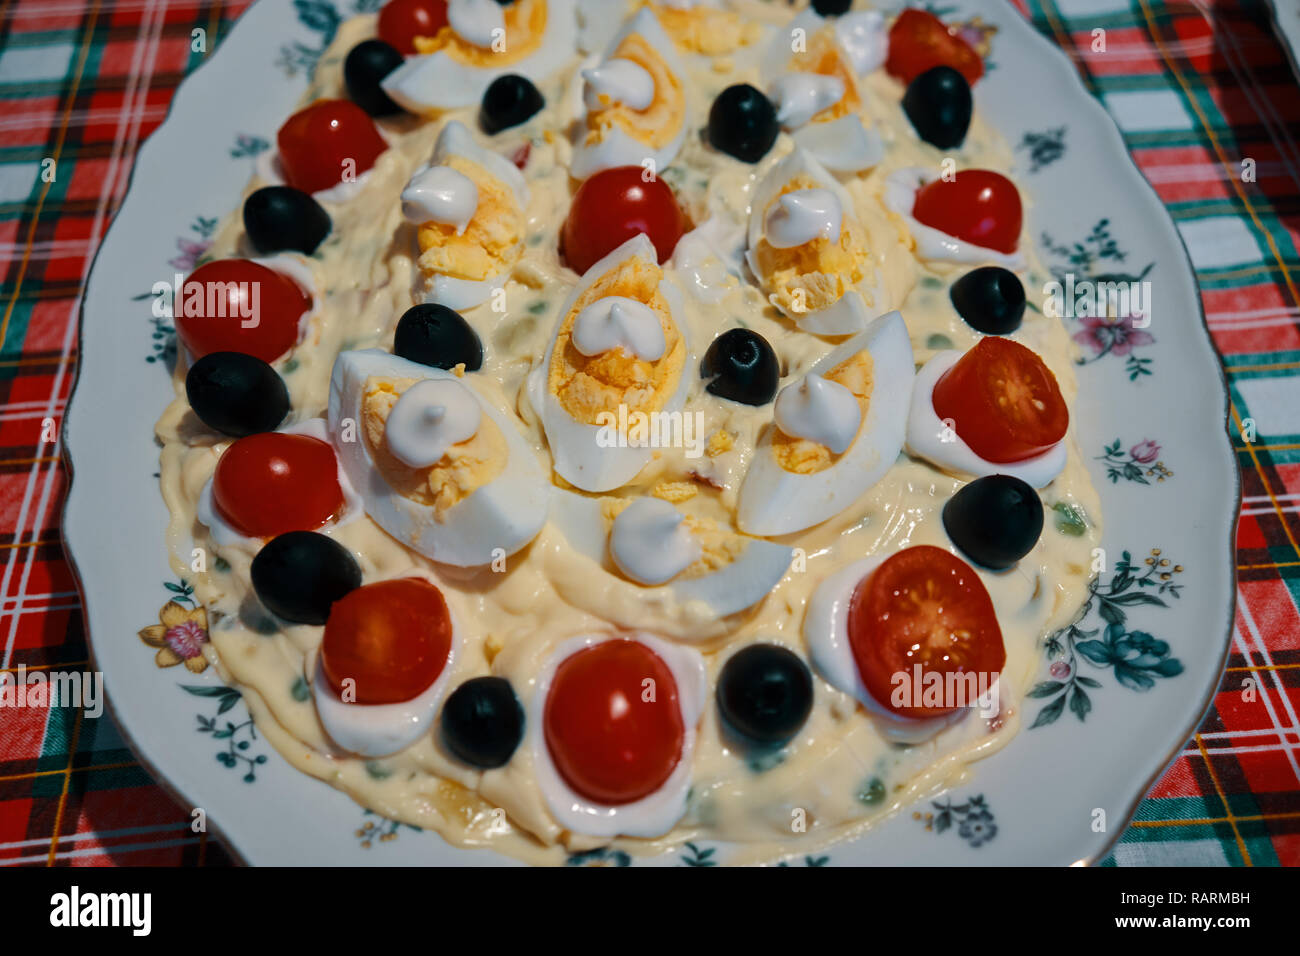 Closeup view of russian sald typical italian food Stock Photo